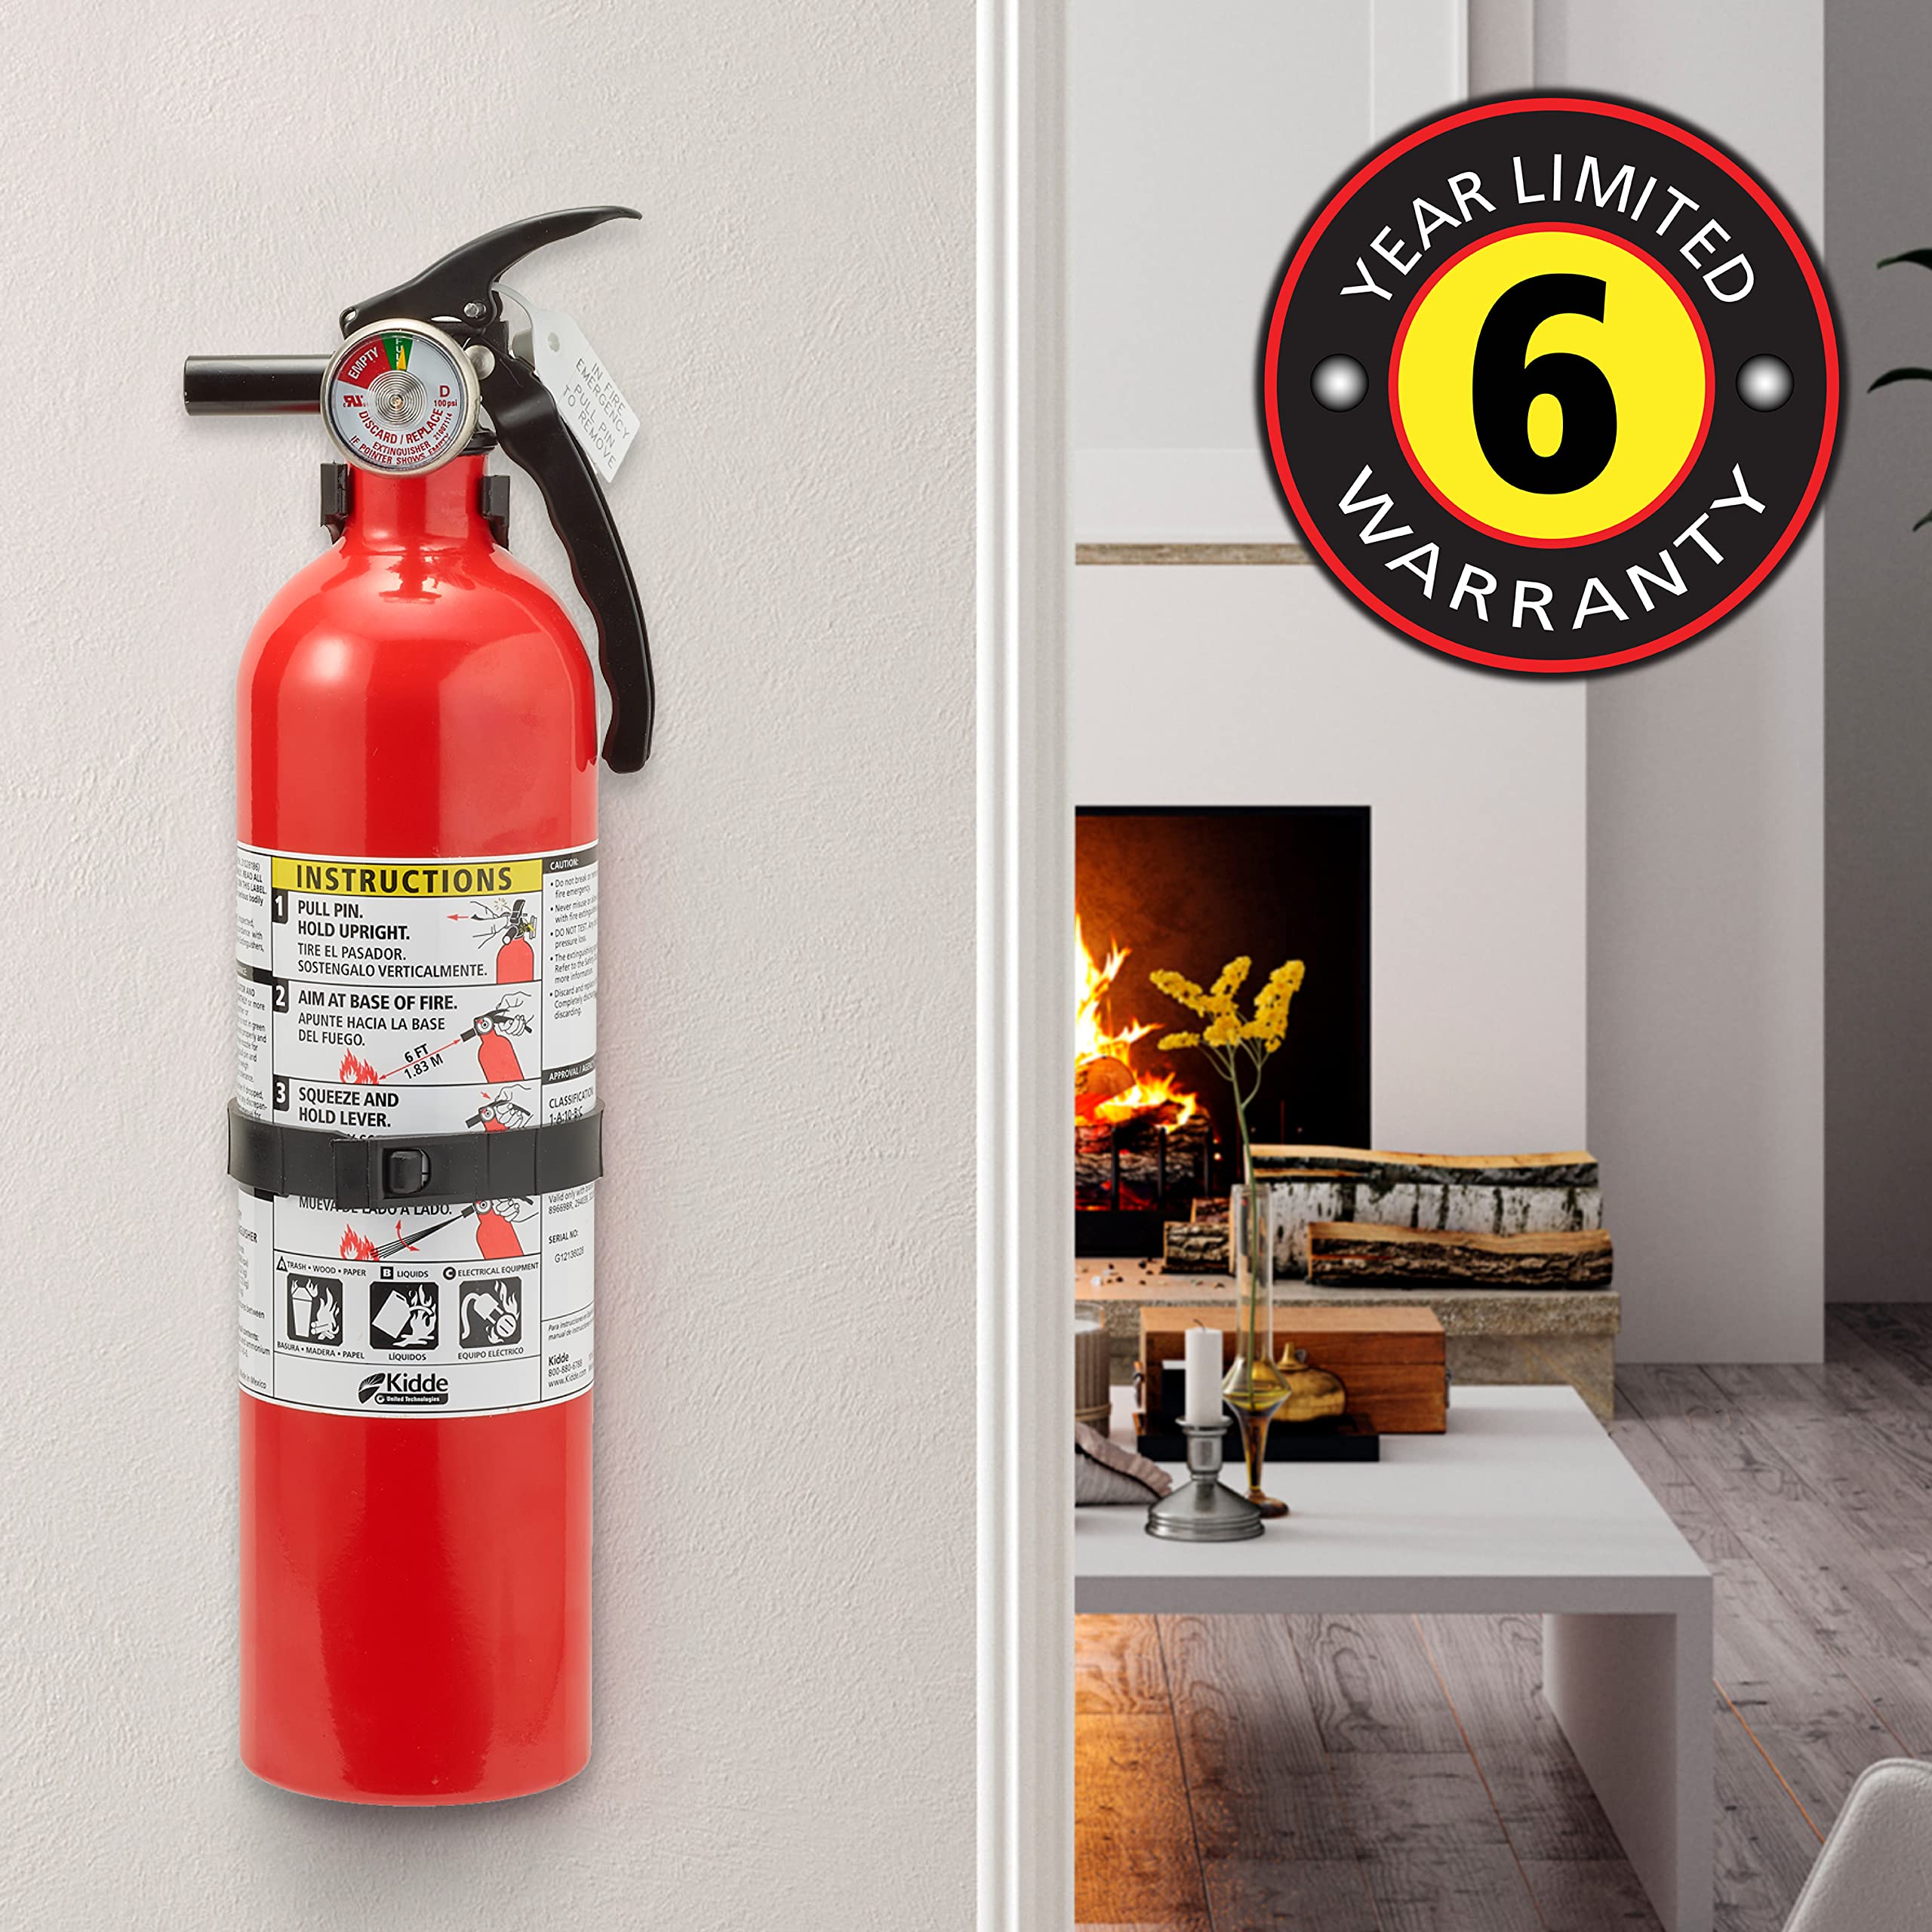 Kidde FA110G Basic Fire Extinguisher, 6 Pack, Red